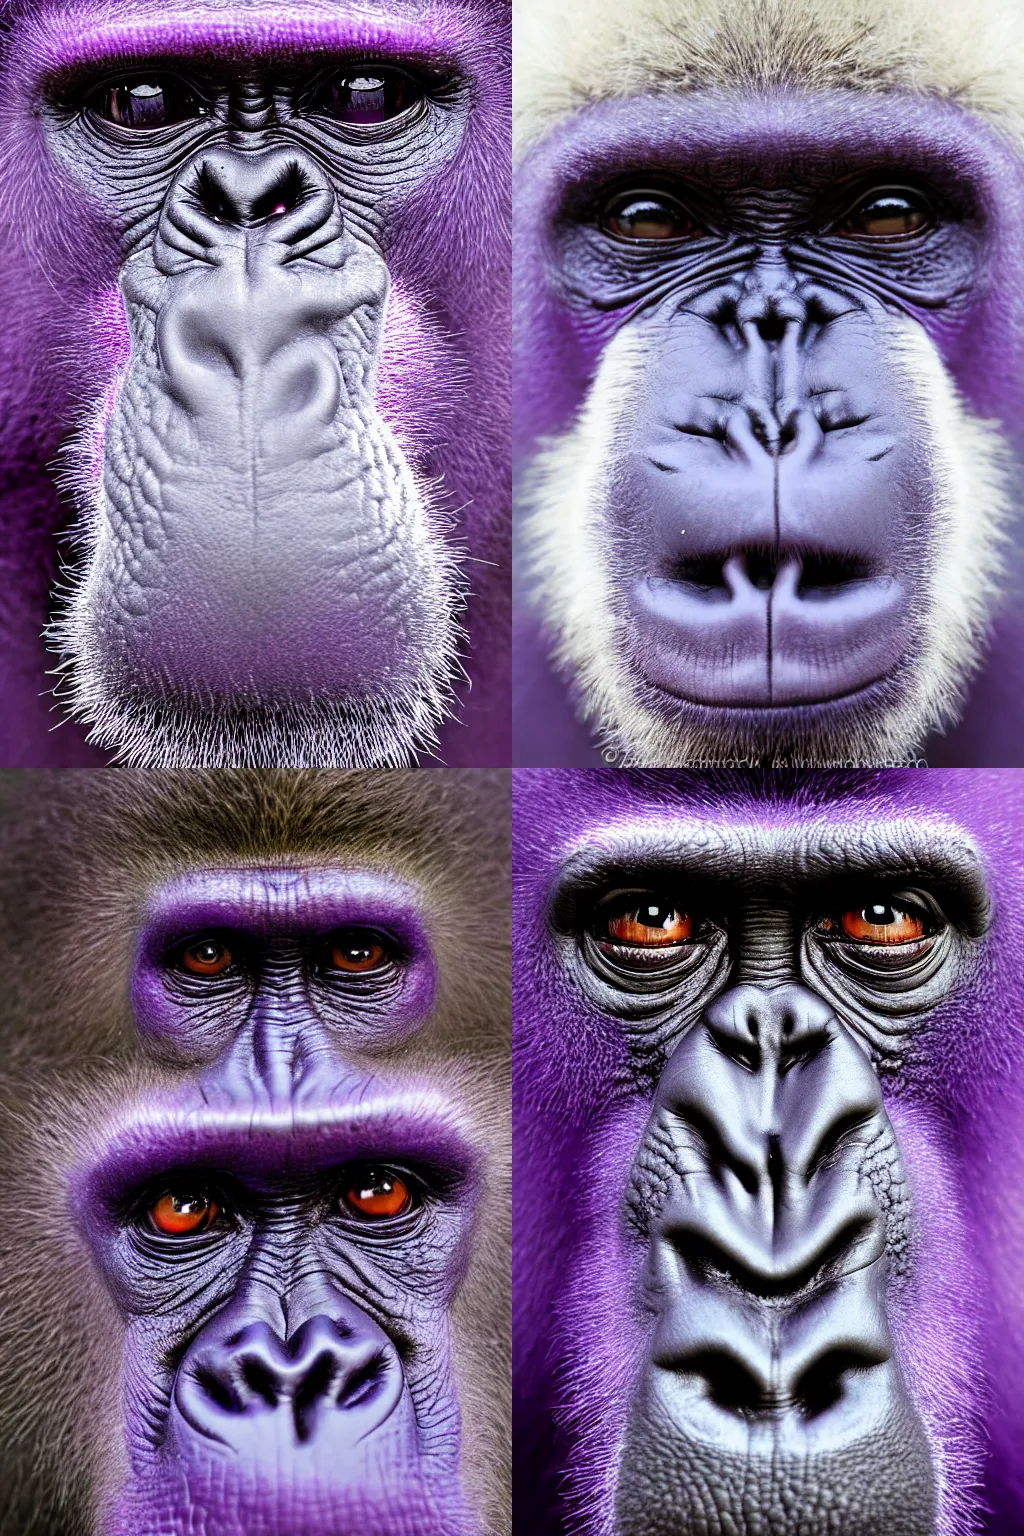 Prompt: purple gorilla, award winning photograph, face closeup